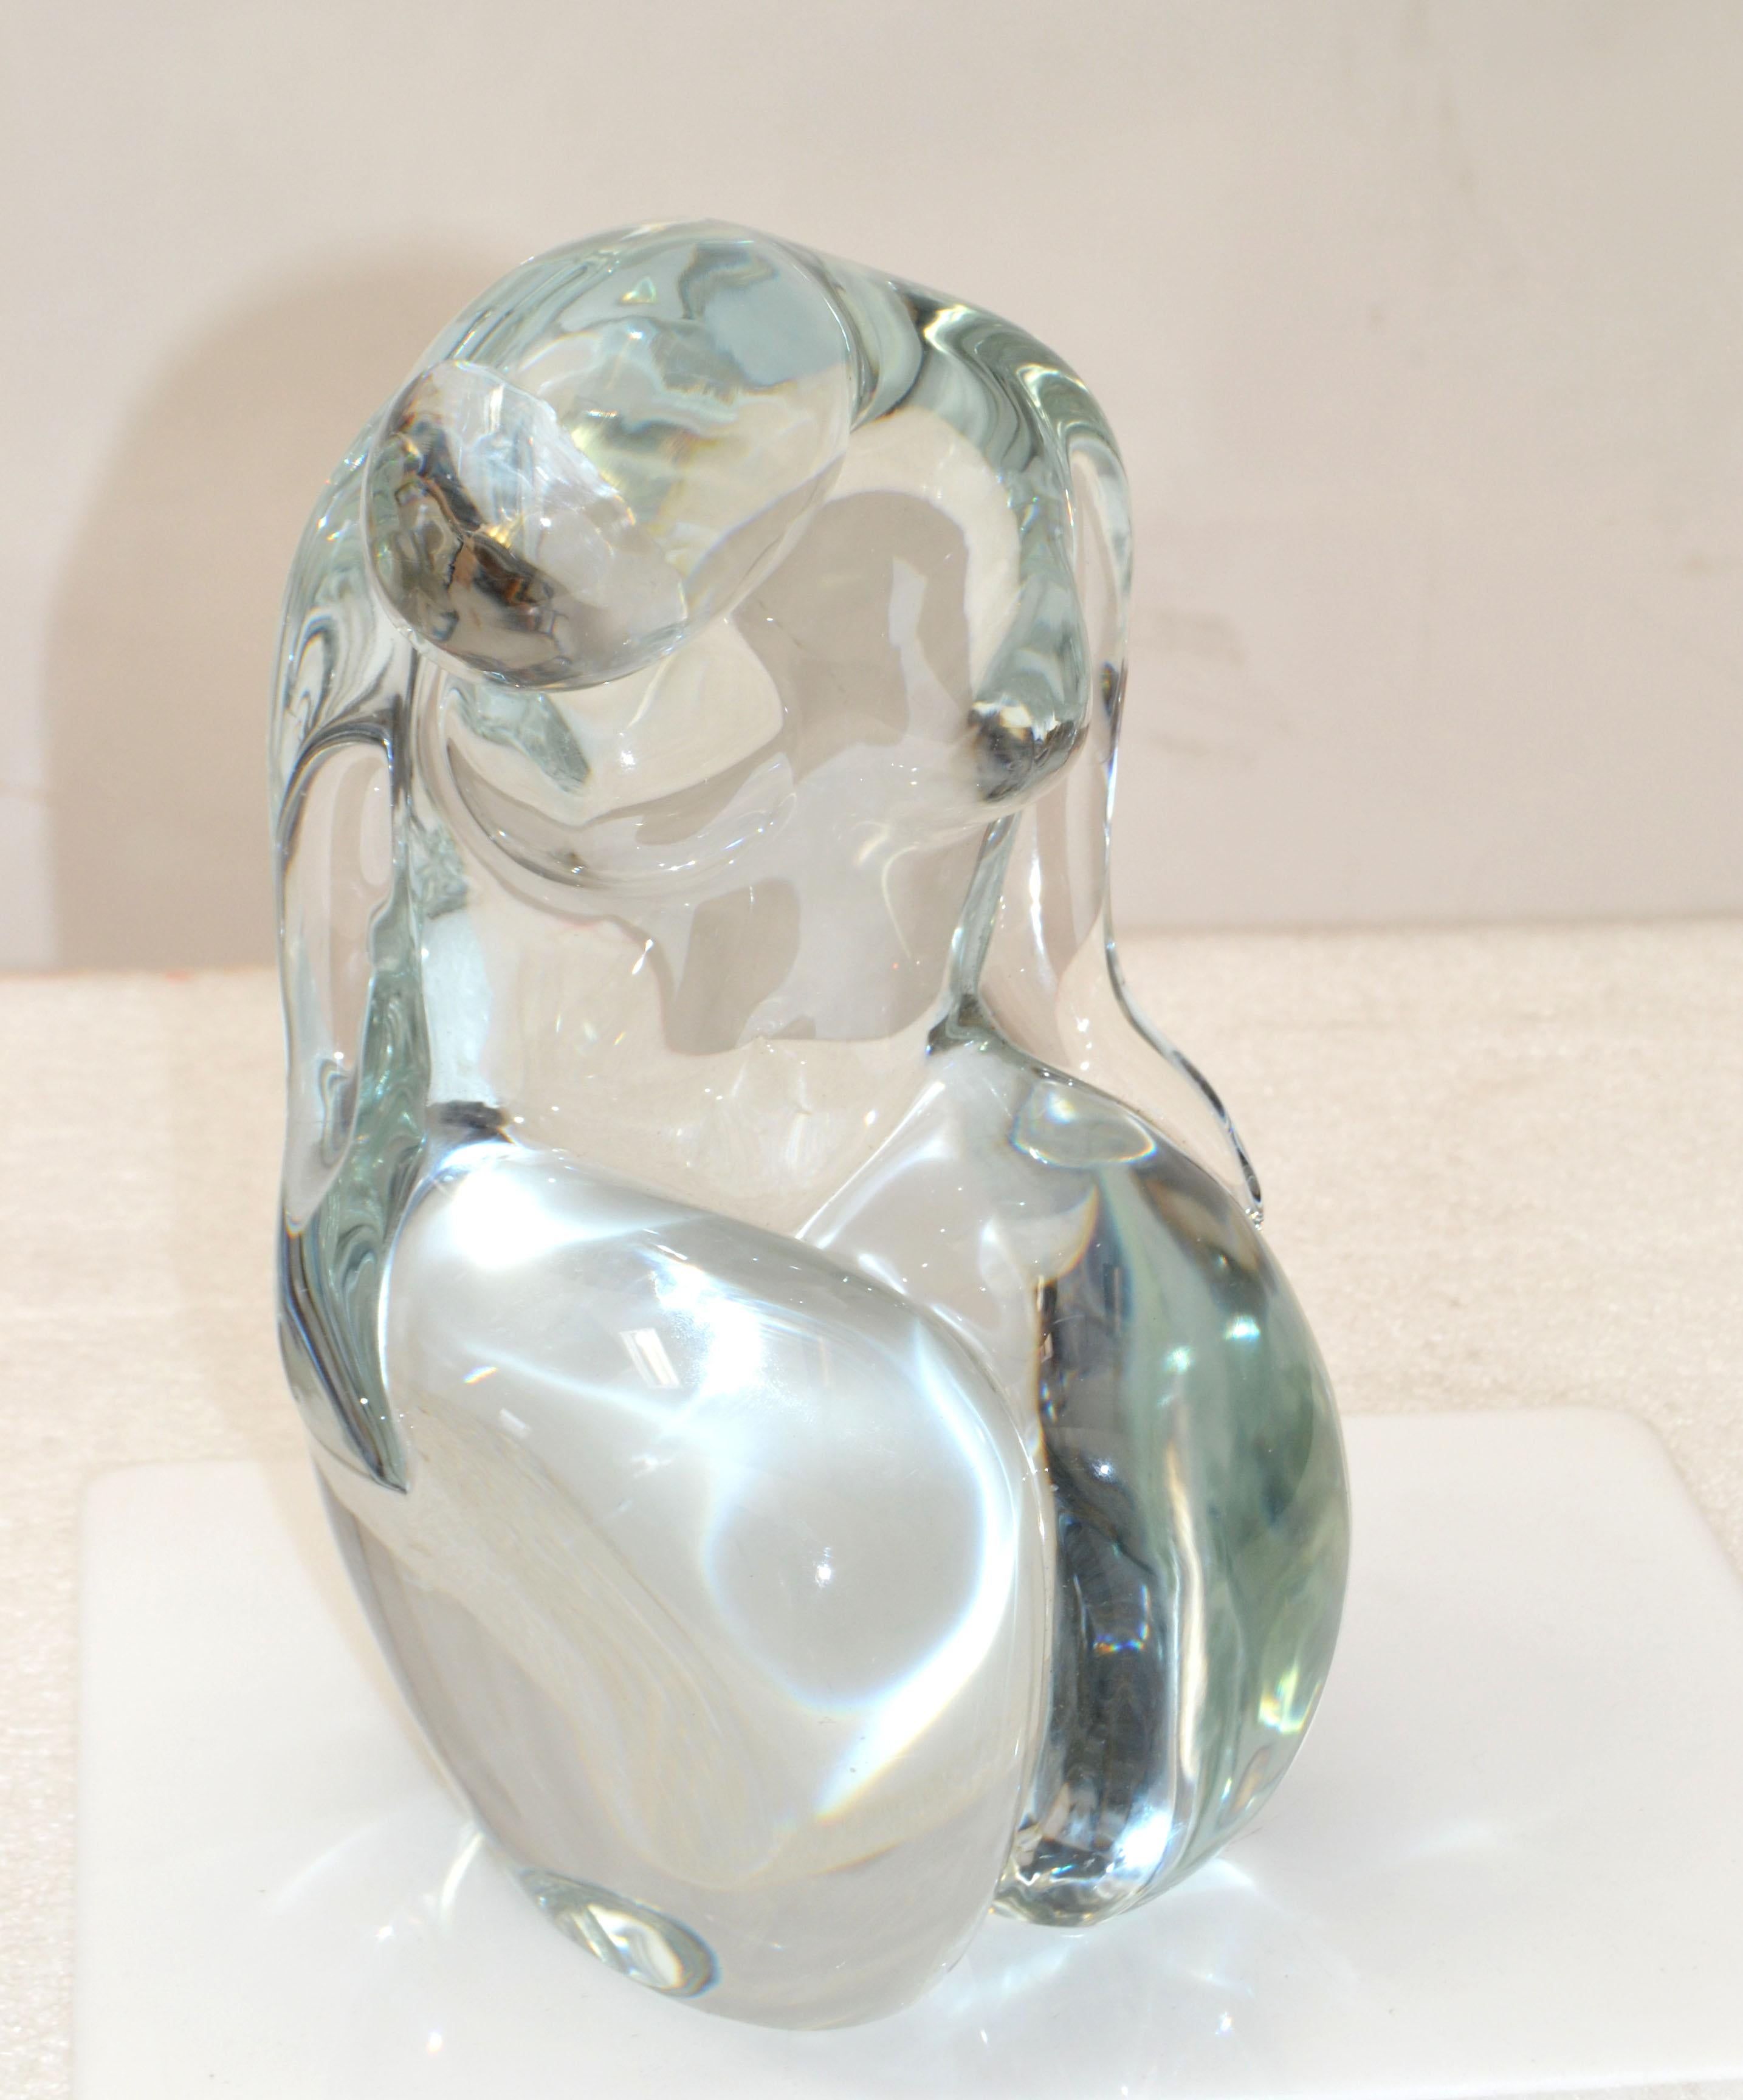 Hand-Crafted Elio Raffaeli Signed Clear Murano Glass Nude Woman Sculpture Figurine Italy 1980 For Sale